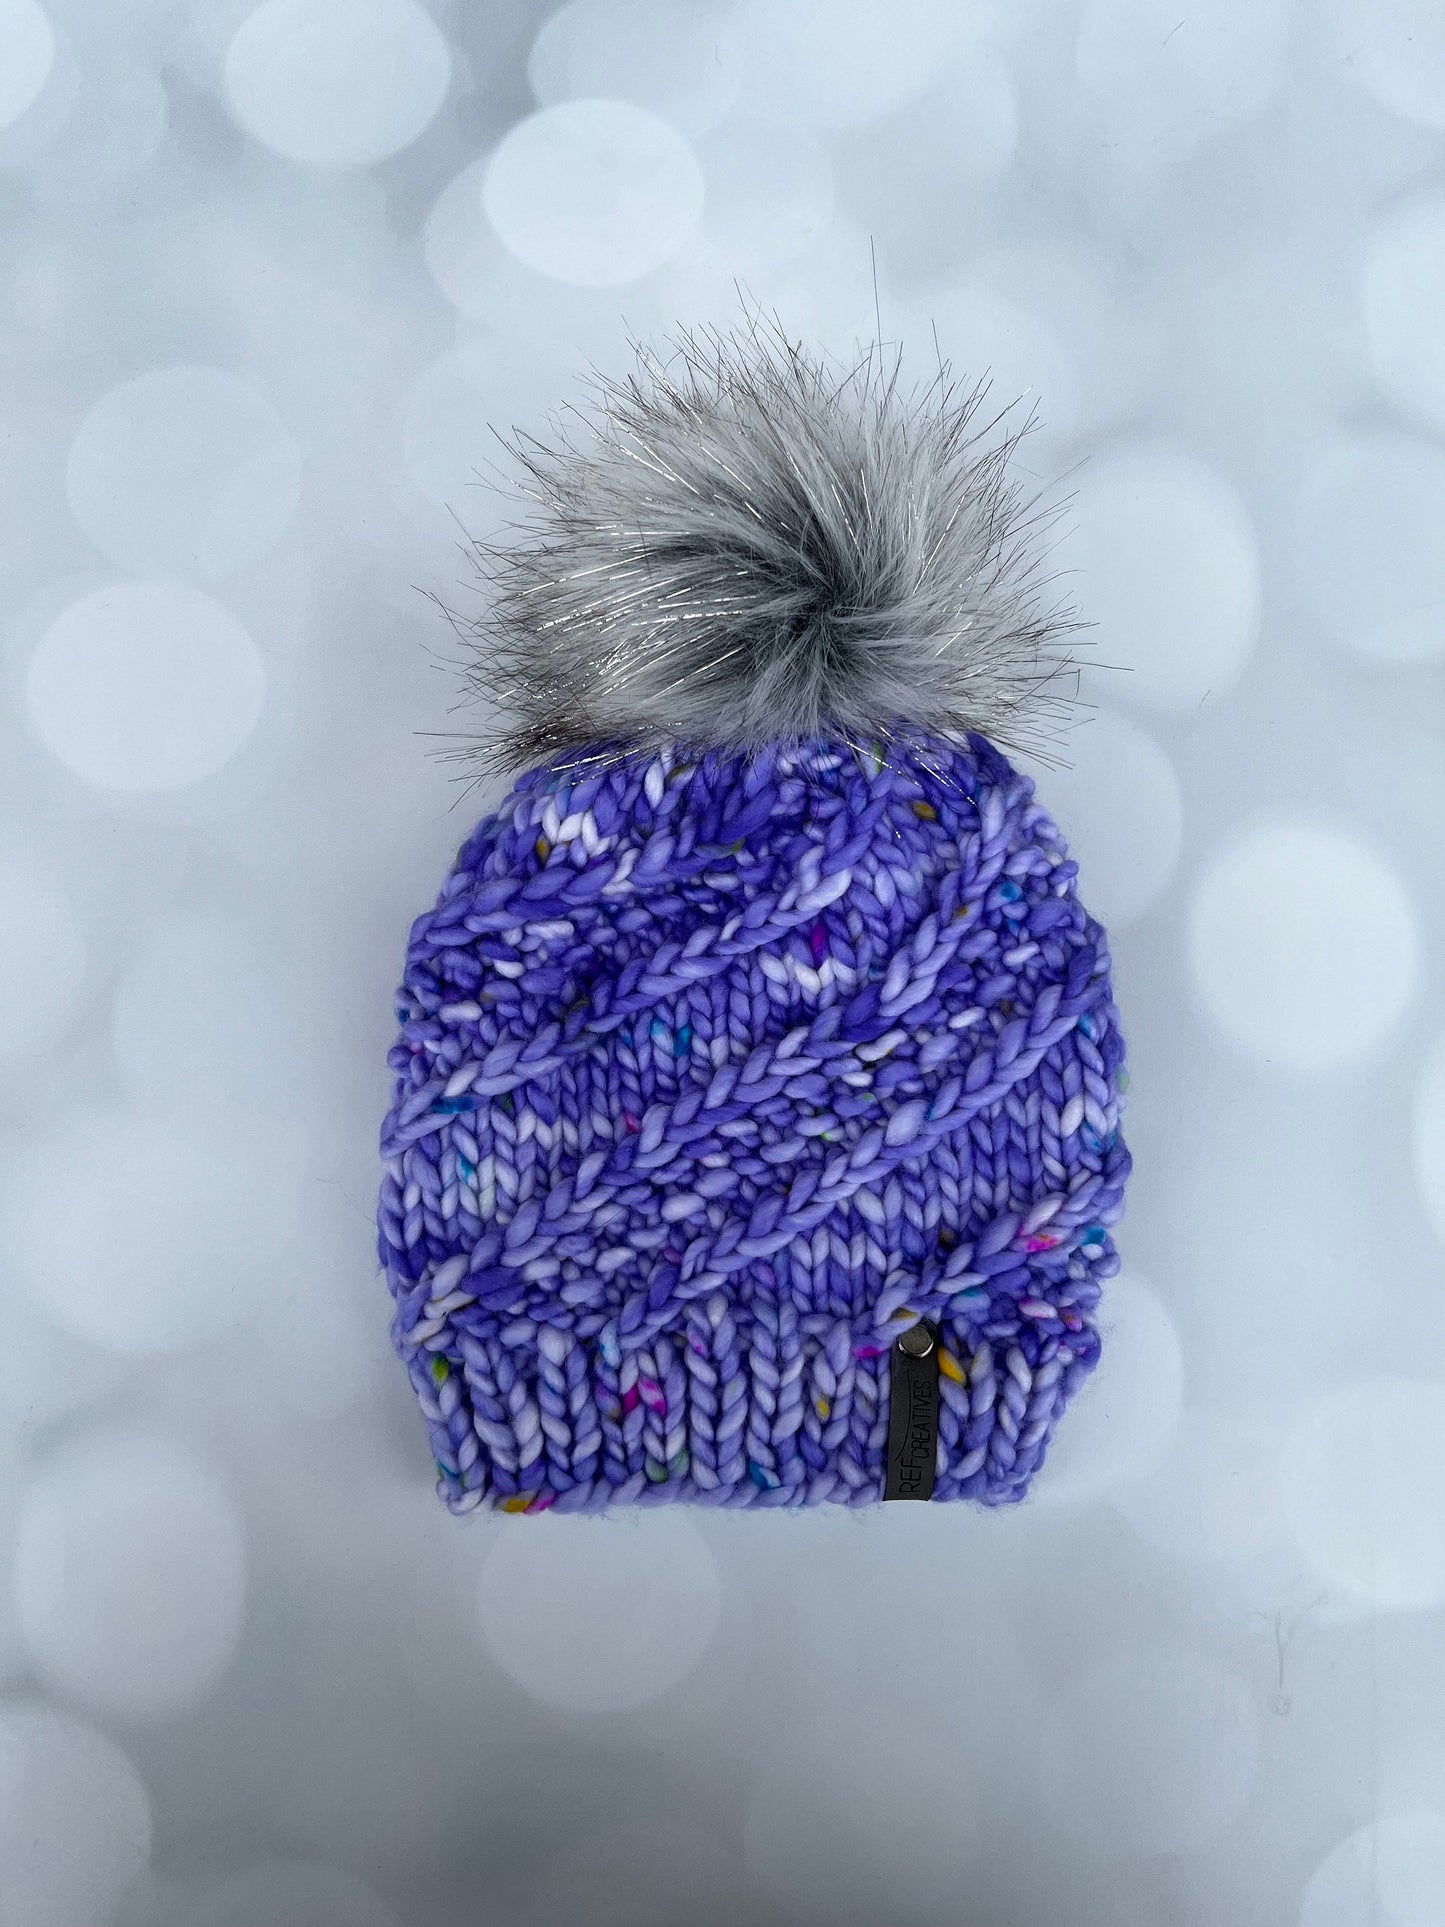 Luxury Purple Merino Wool Knit Hat - Rainbow Nerds Sidewinder Hand Knit Hat with Hand Dyed Yarn